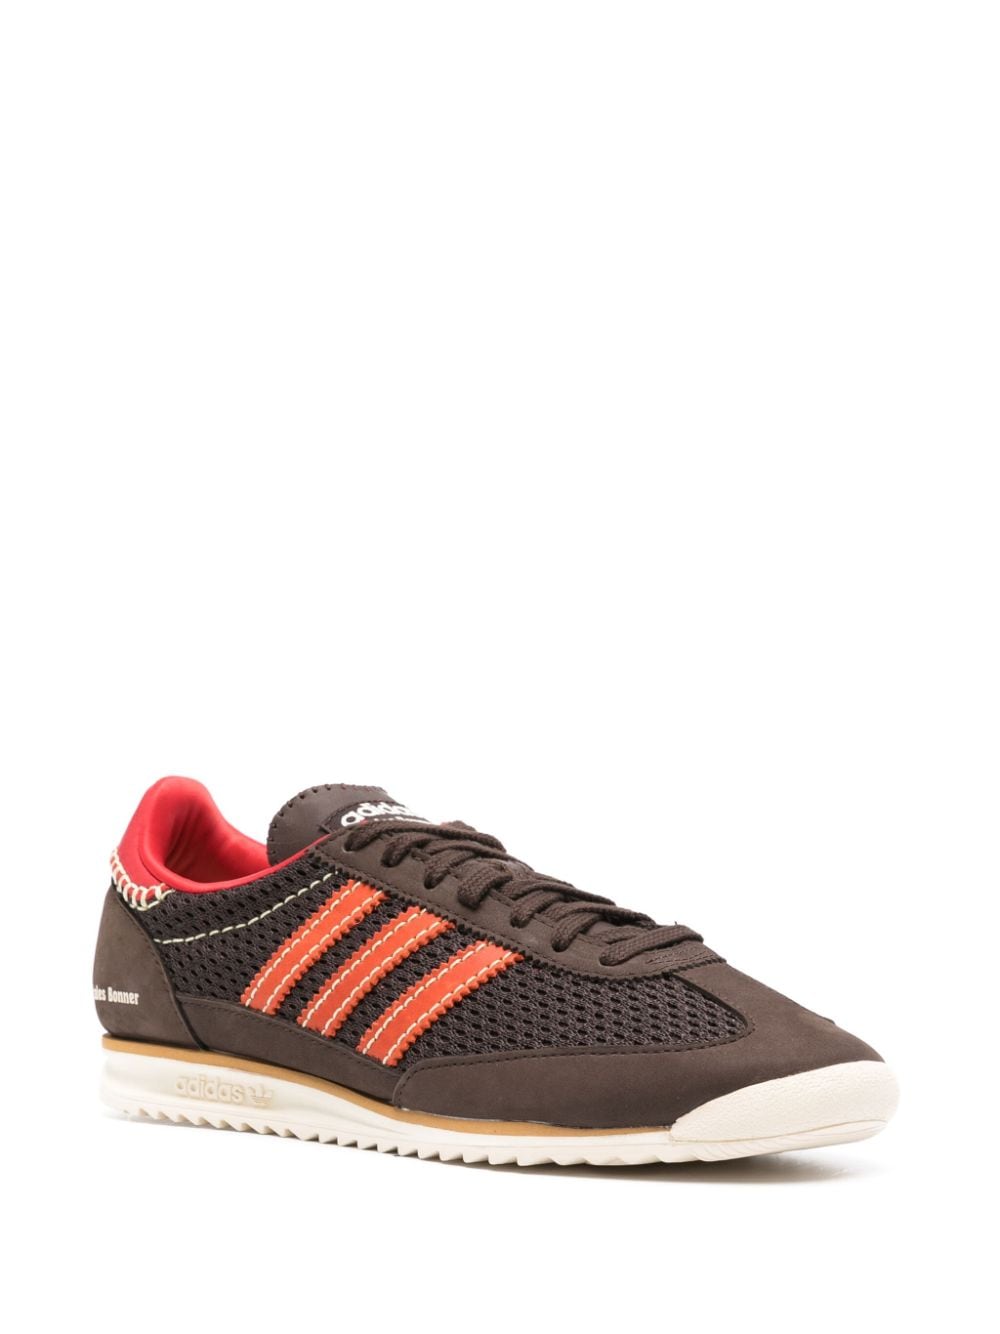 Shop Adidas Originals X Wales Bonner Sl72 Knit Sneakers In Brown